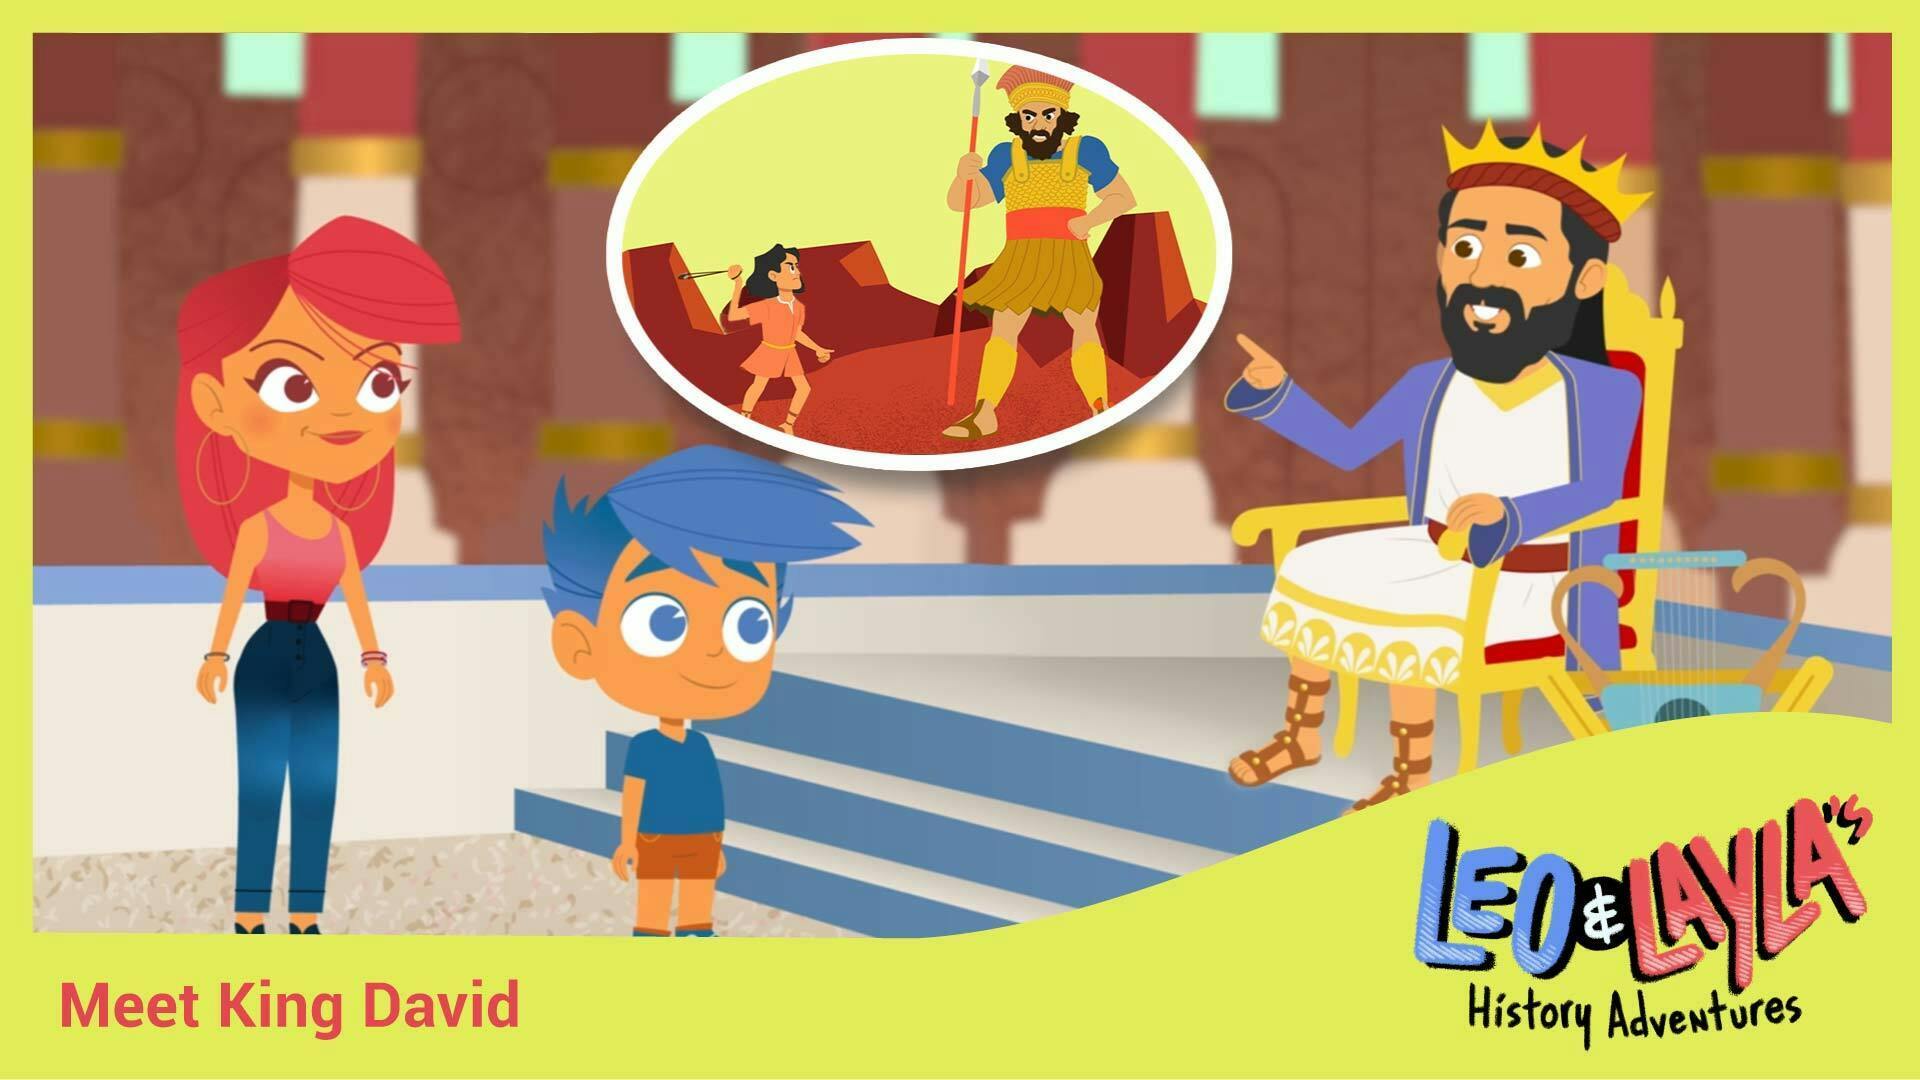 King David: The Underdog King of Israel